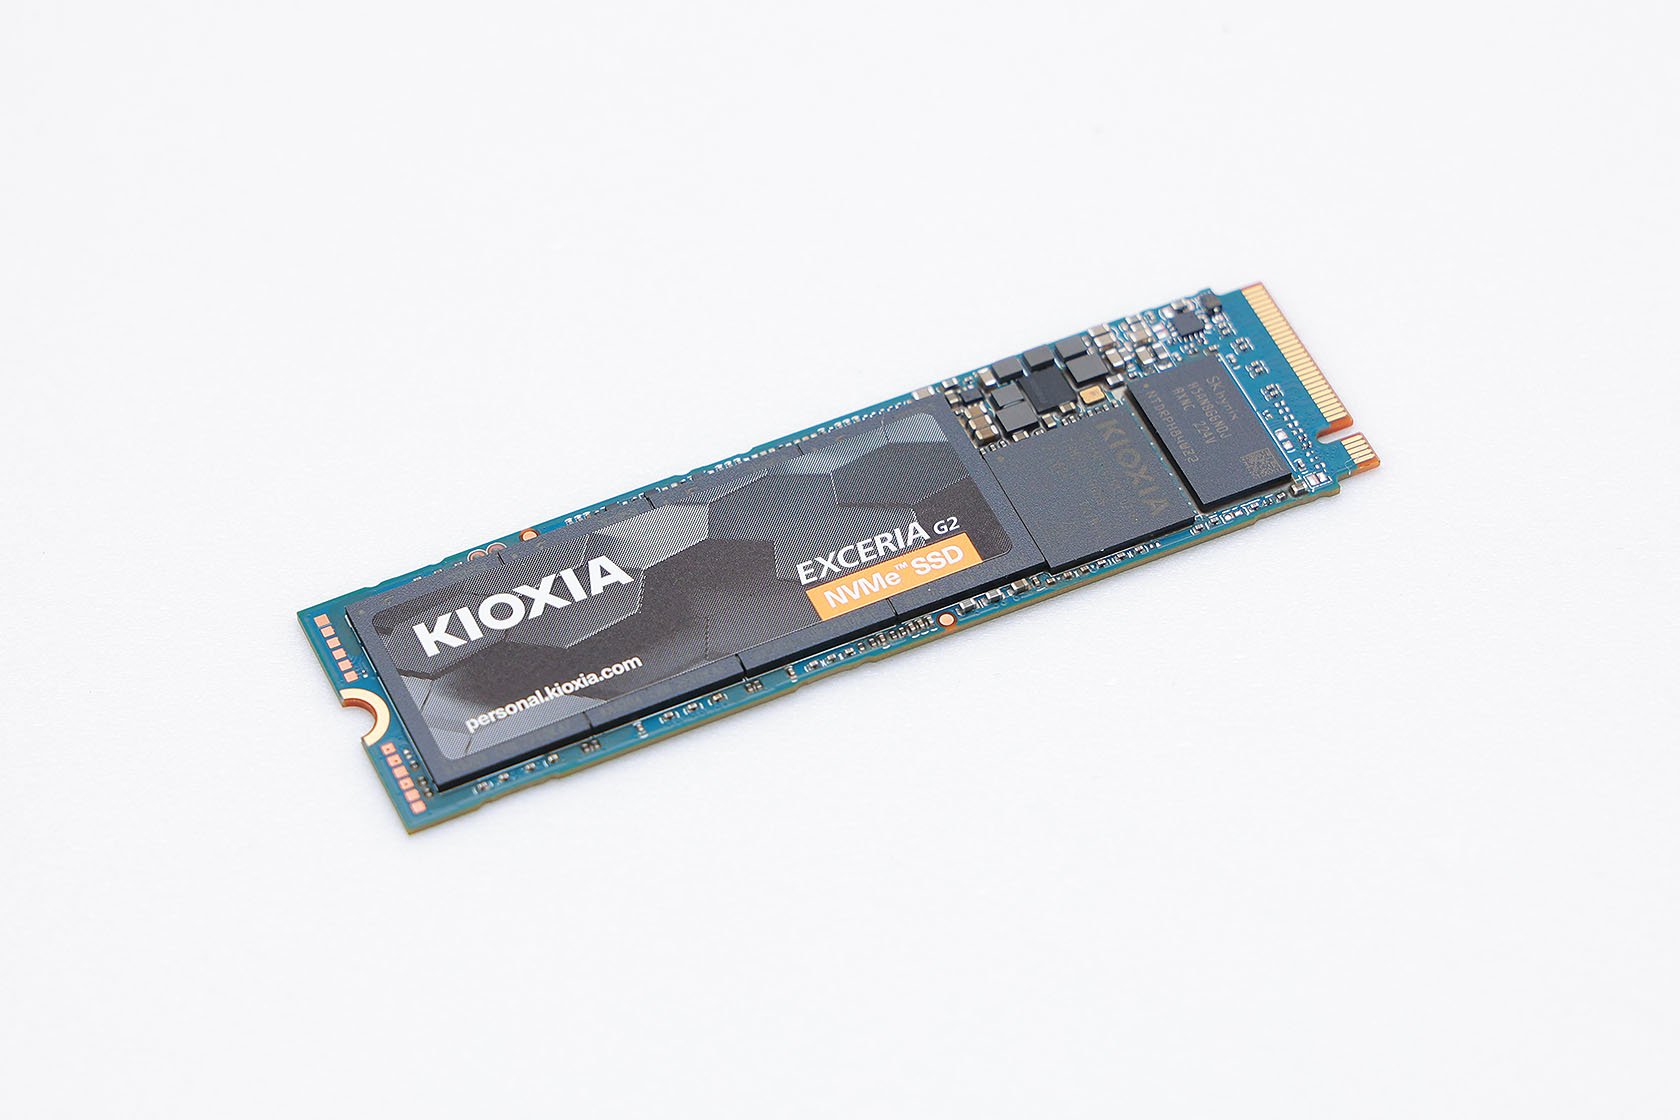 KIOXIA の EXCERIA G2 SSD-CK2.0N3G2/N